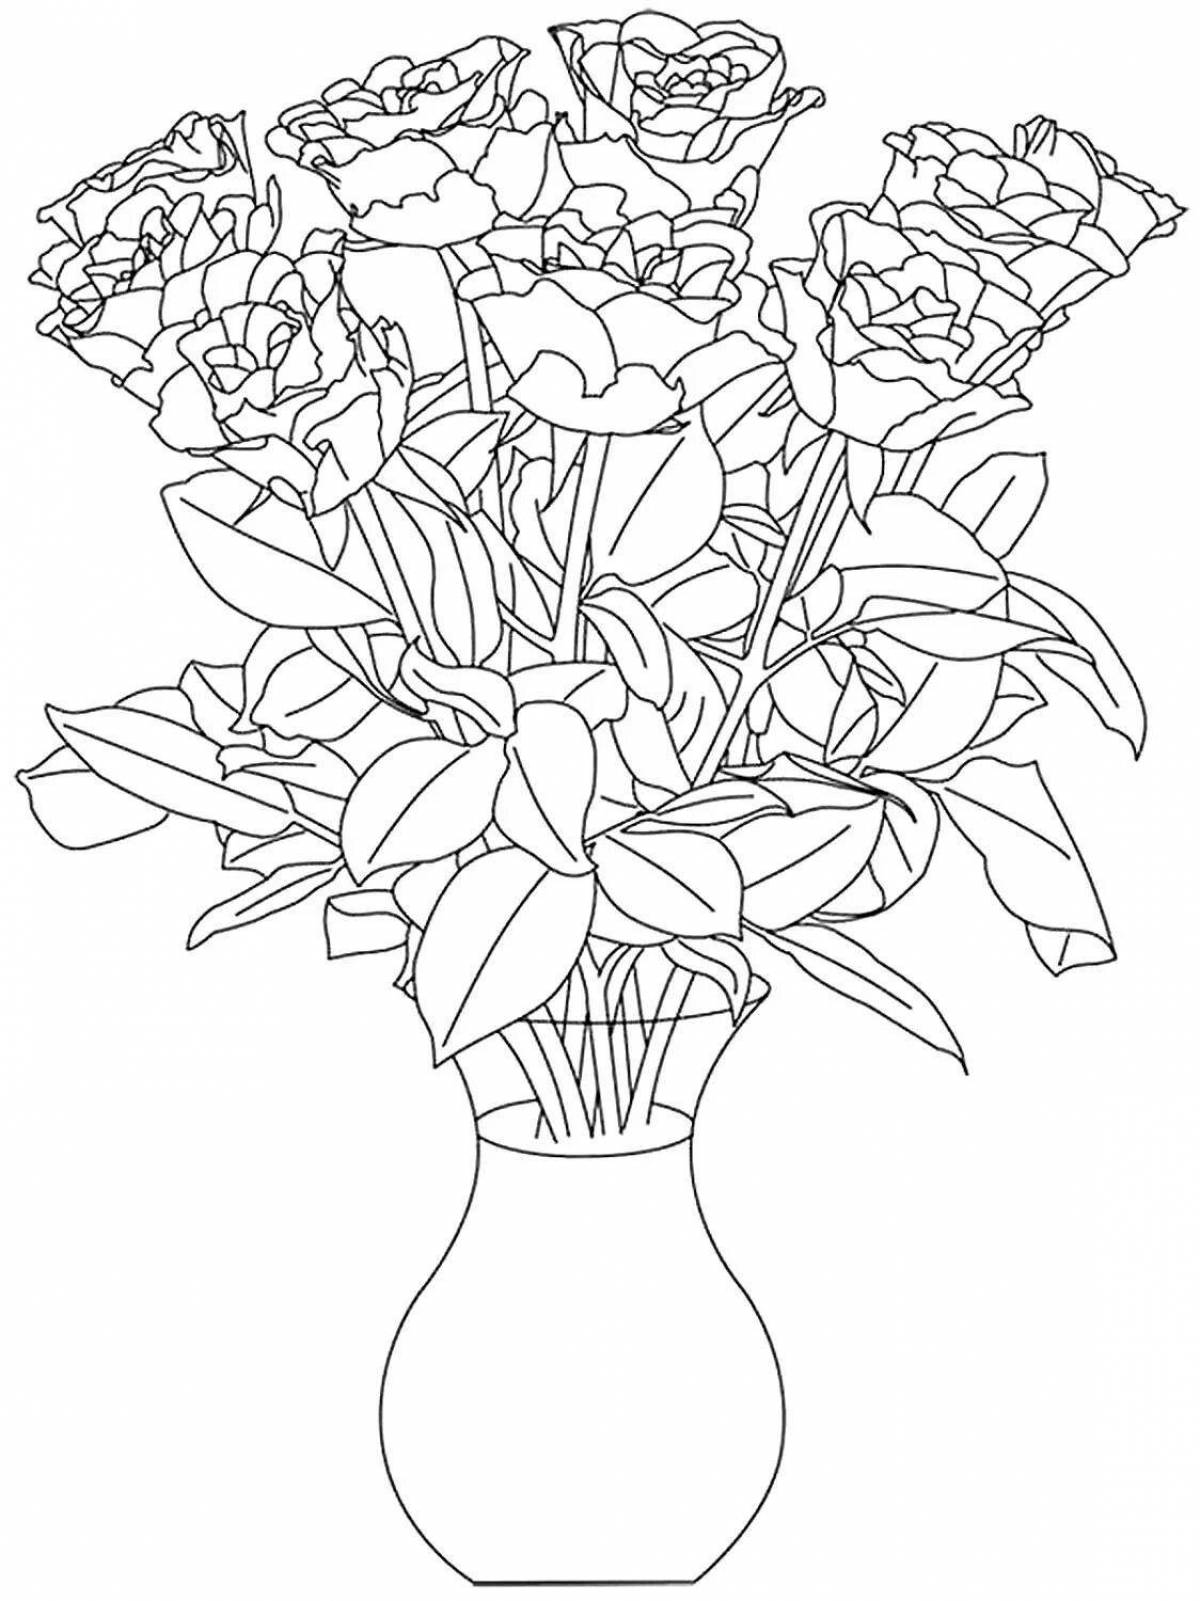 Радужная ваза с цветами раскраска для детей